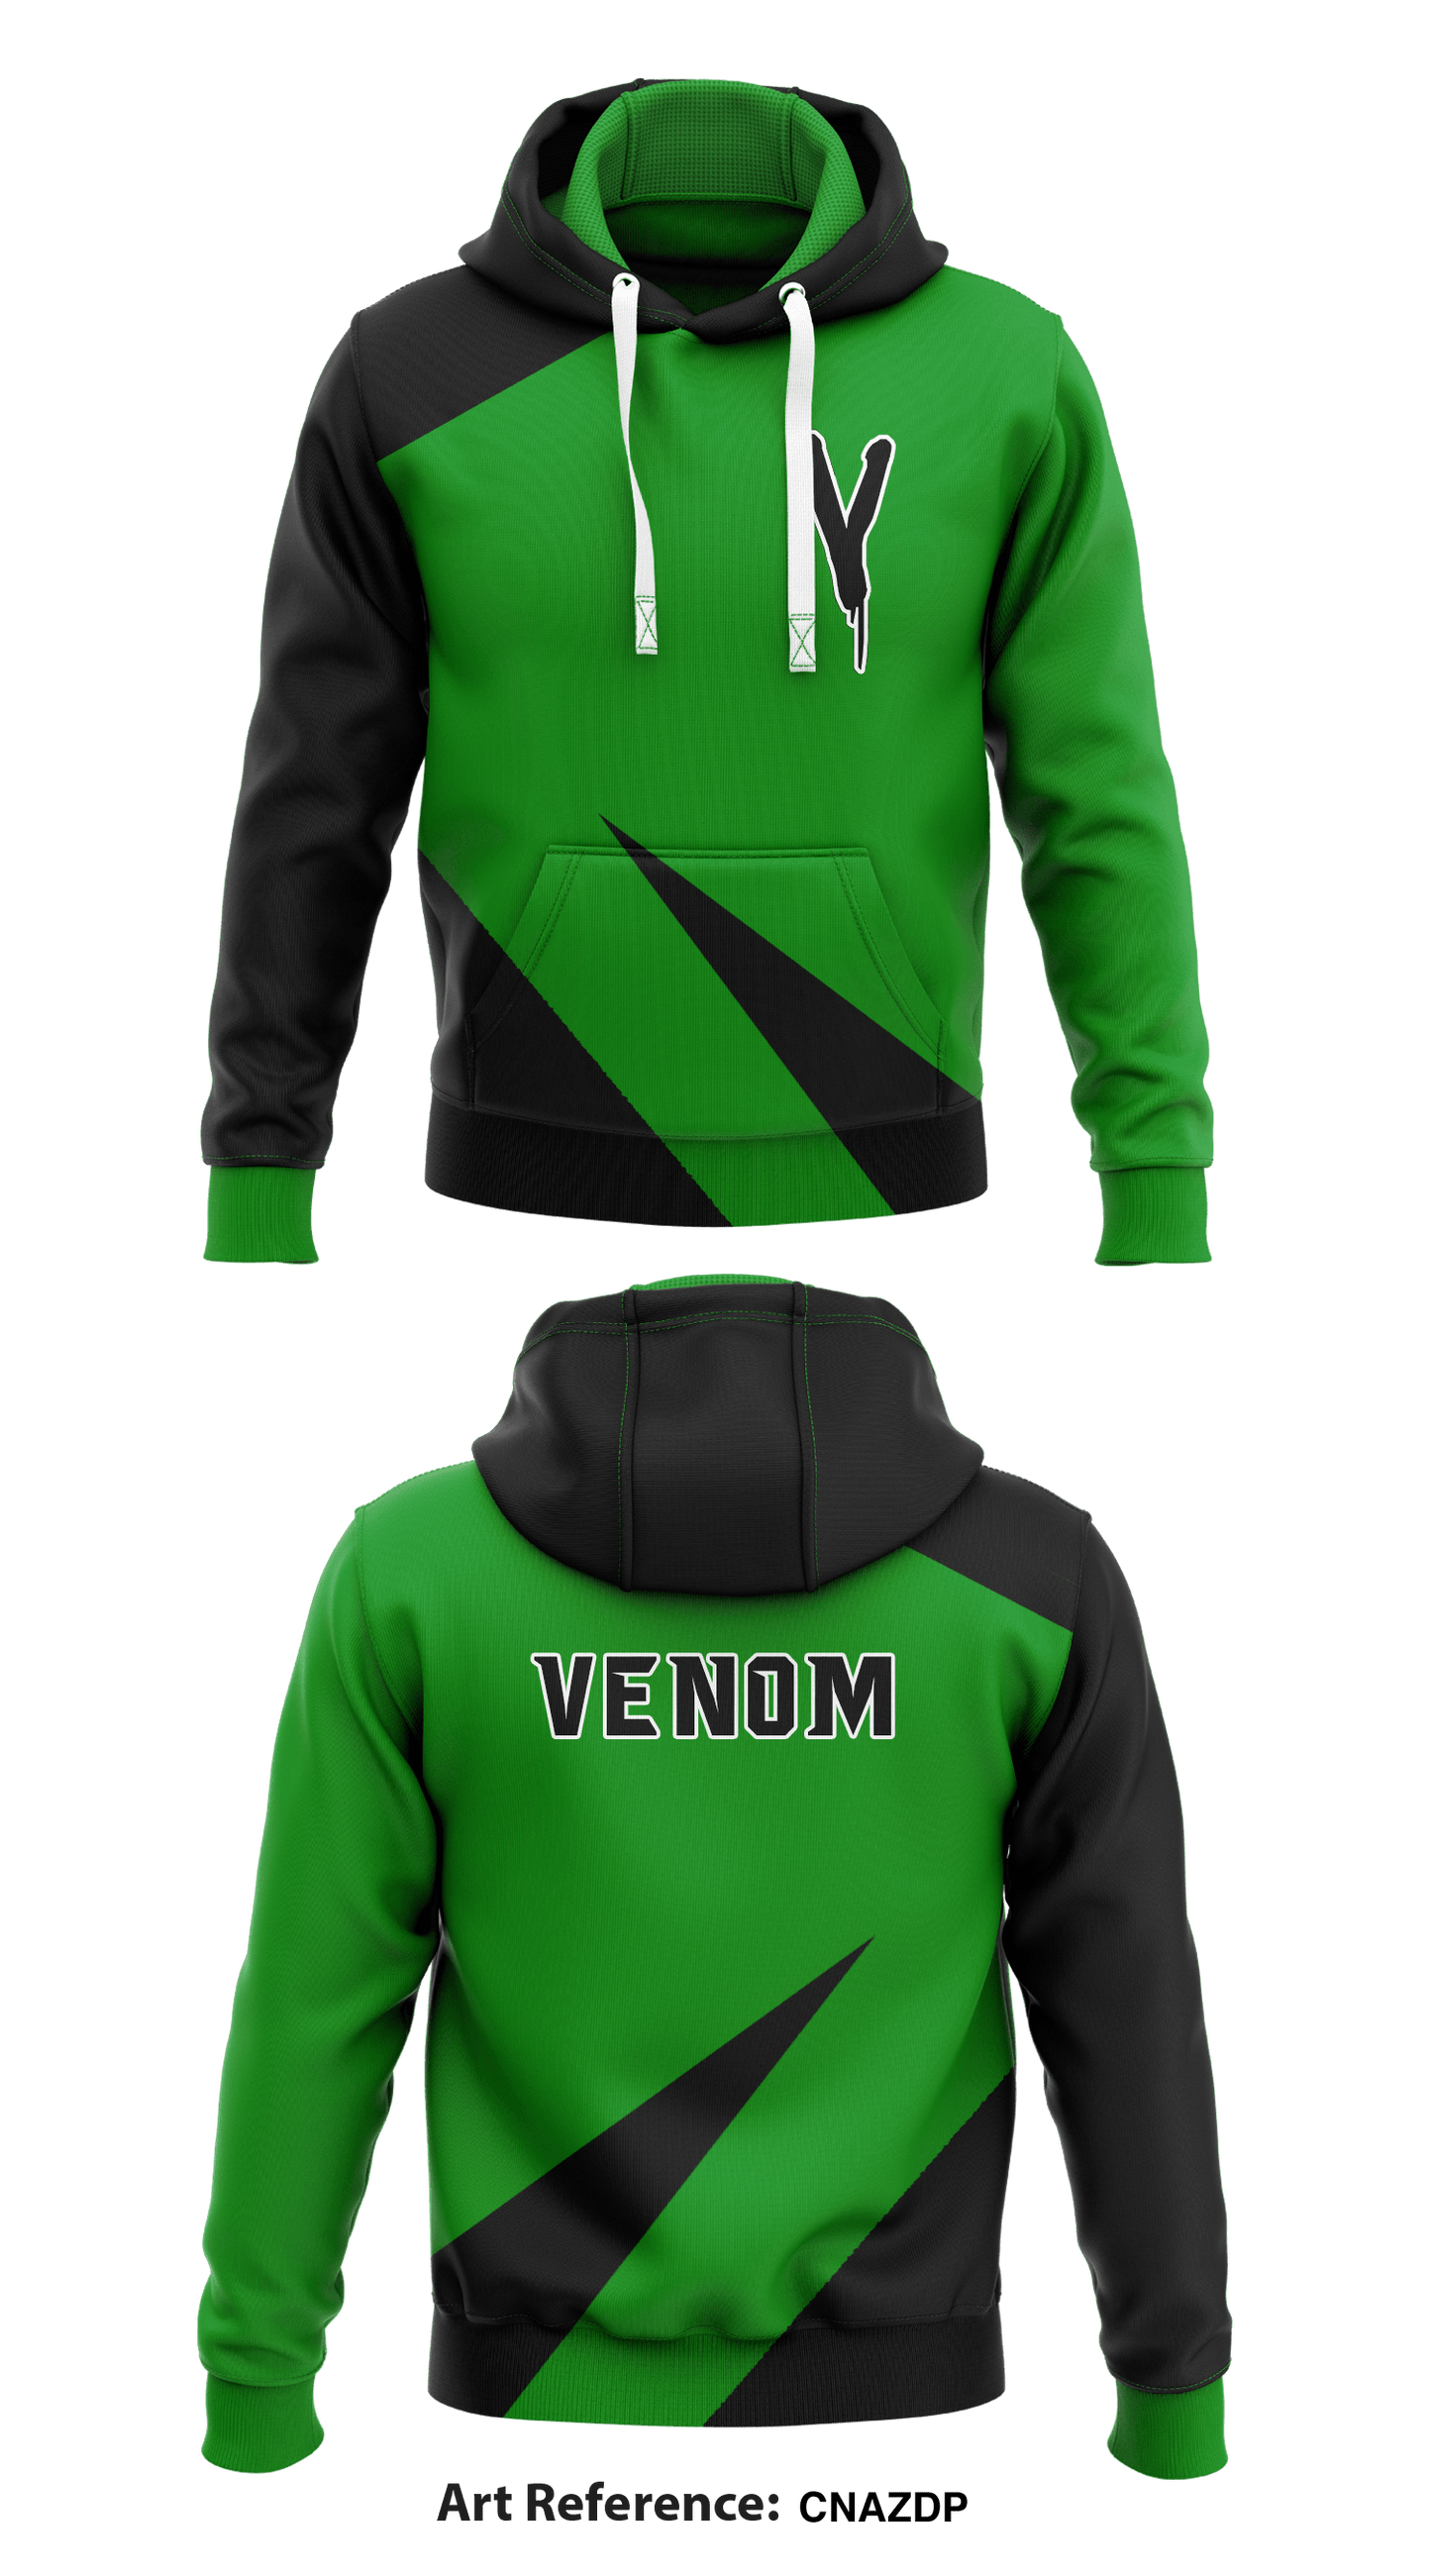 Venom Store 3 Core Men's Hooded Performance Sweatshirt - CNAZDP